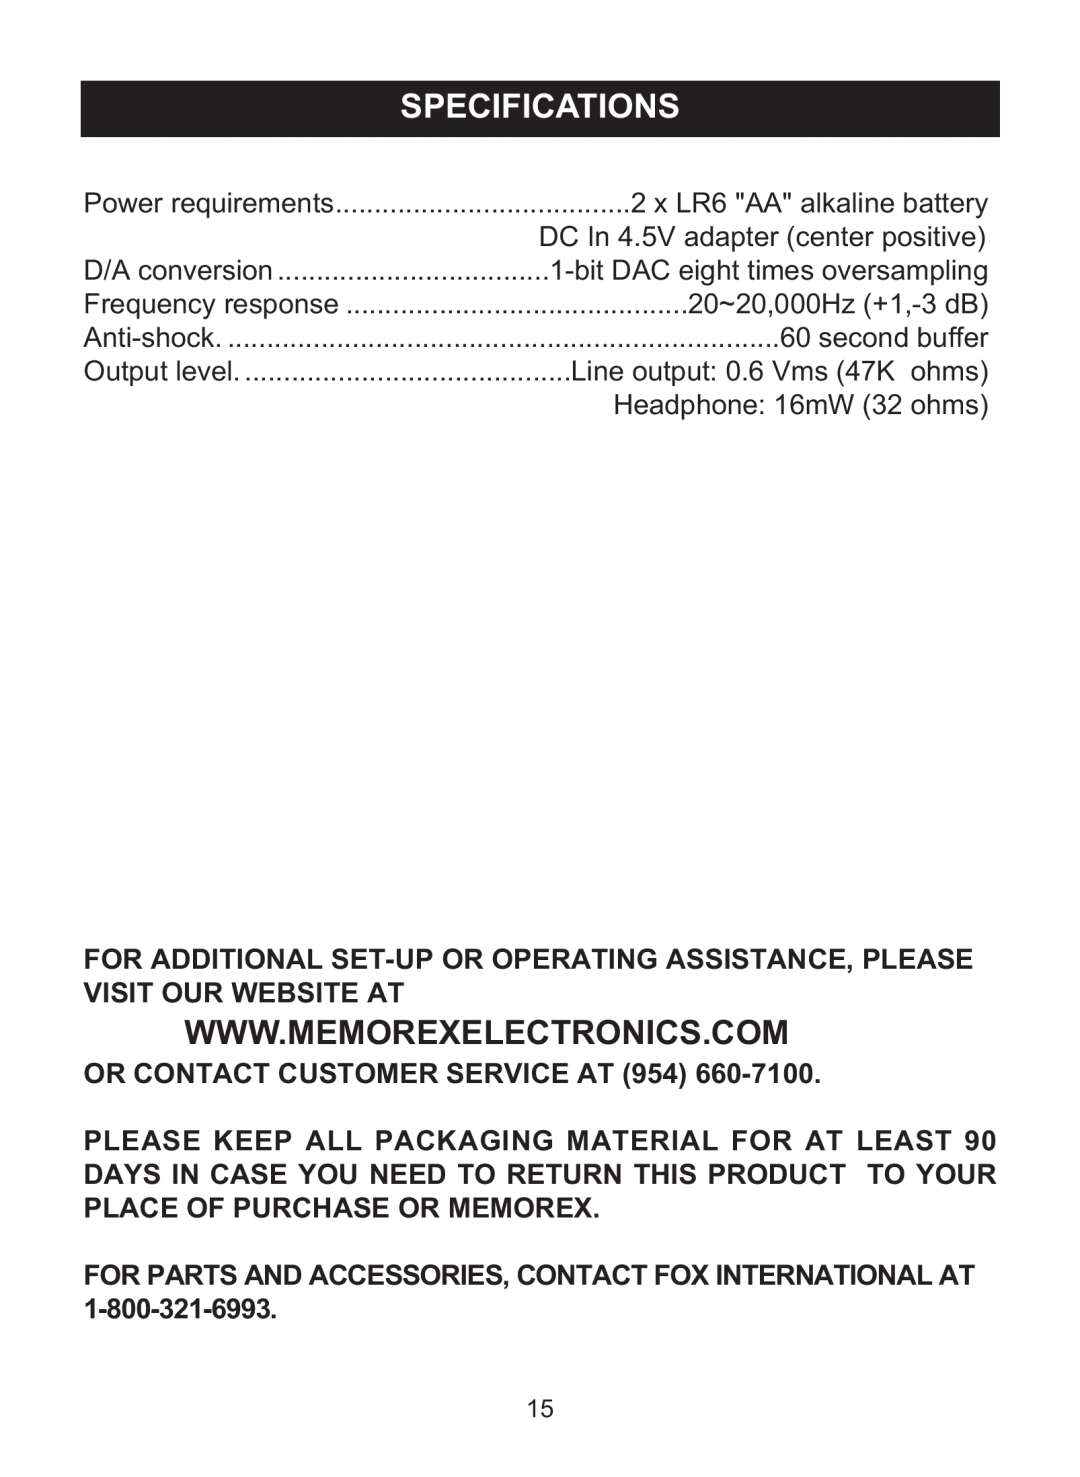 Memorex MD6460 manual Specifications, x LR6 AA alkaline battery, DC In 4.5V adapter center positive, 20~20,000Hz +1,-3dB 